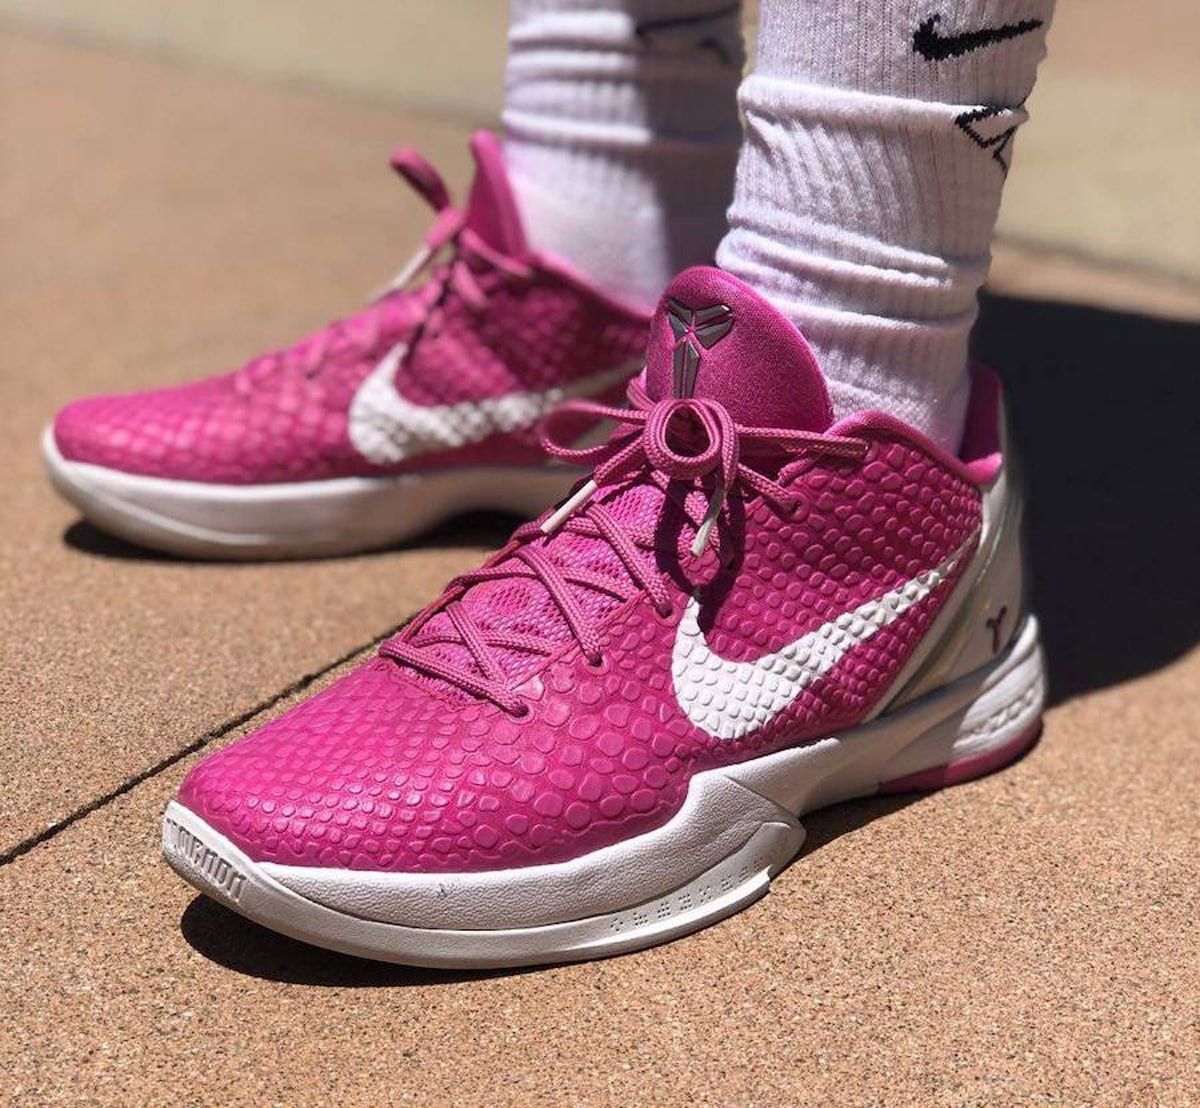 Nike Kobe 6 “Think Pink” Preparing for 